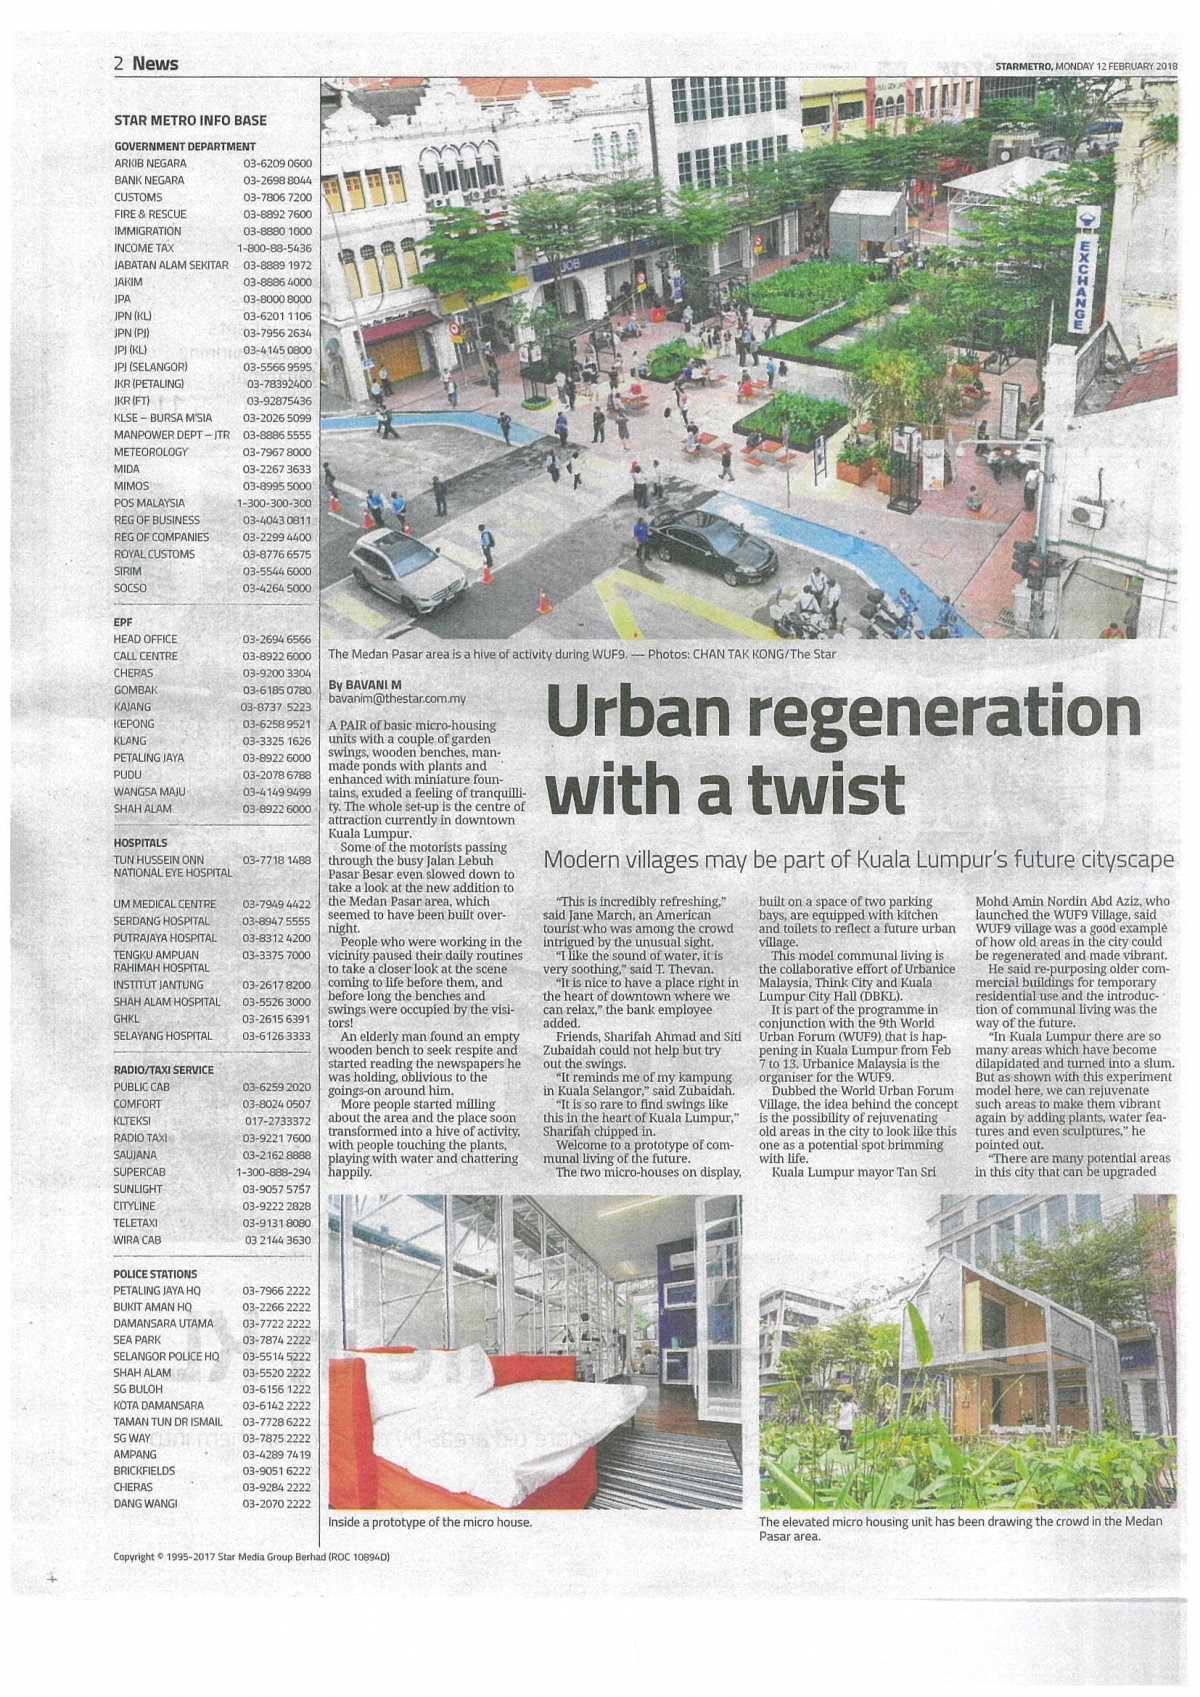 Urban regeneration with a twist